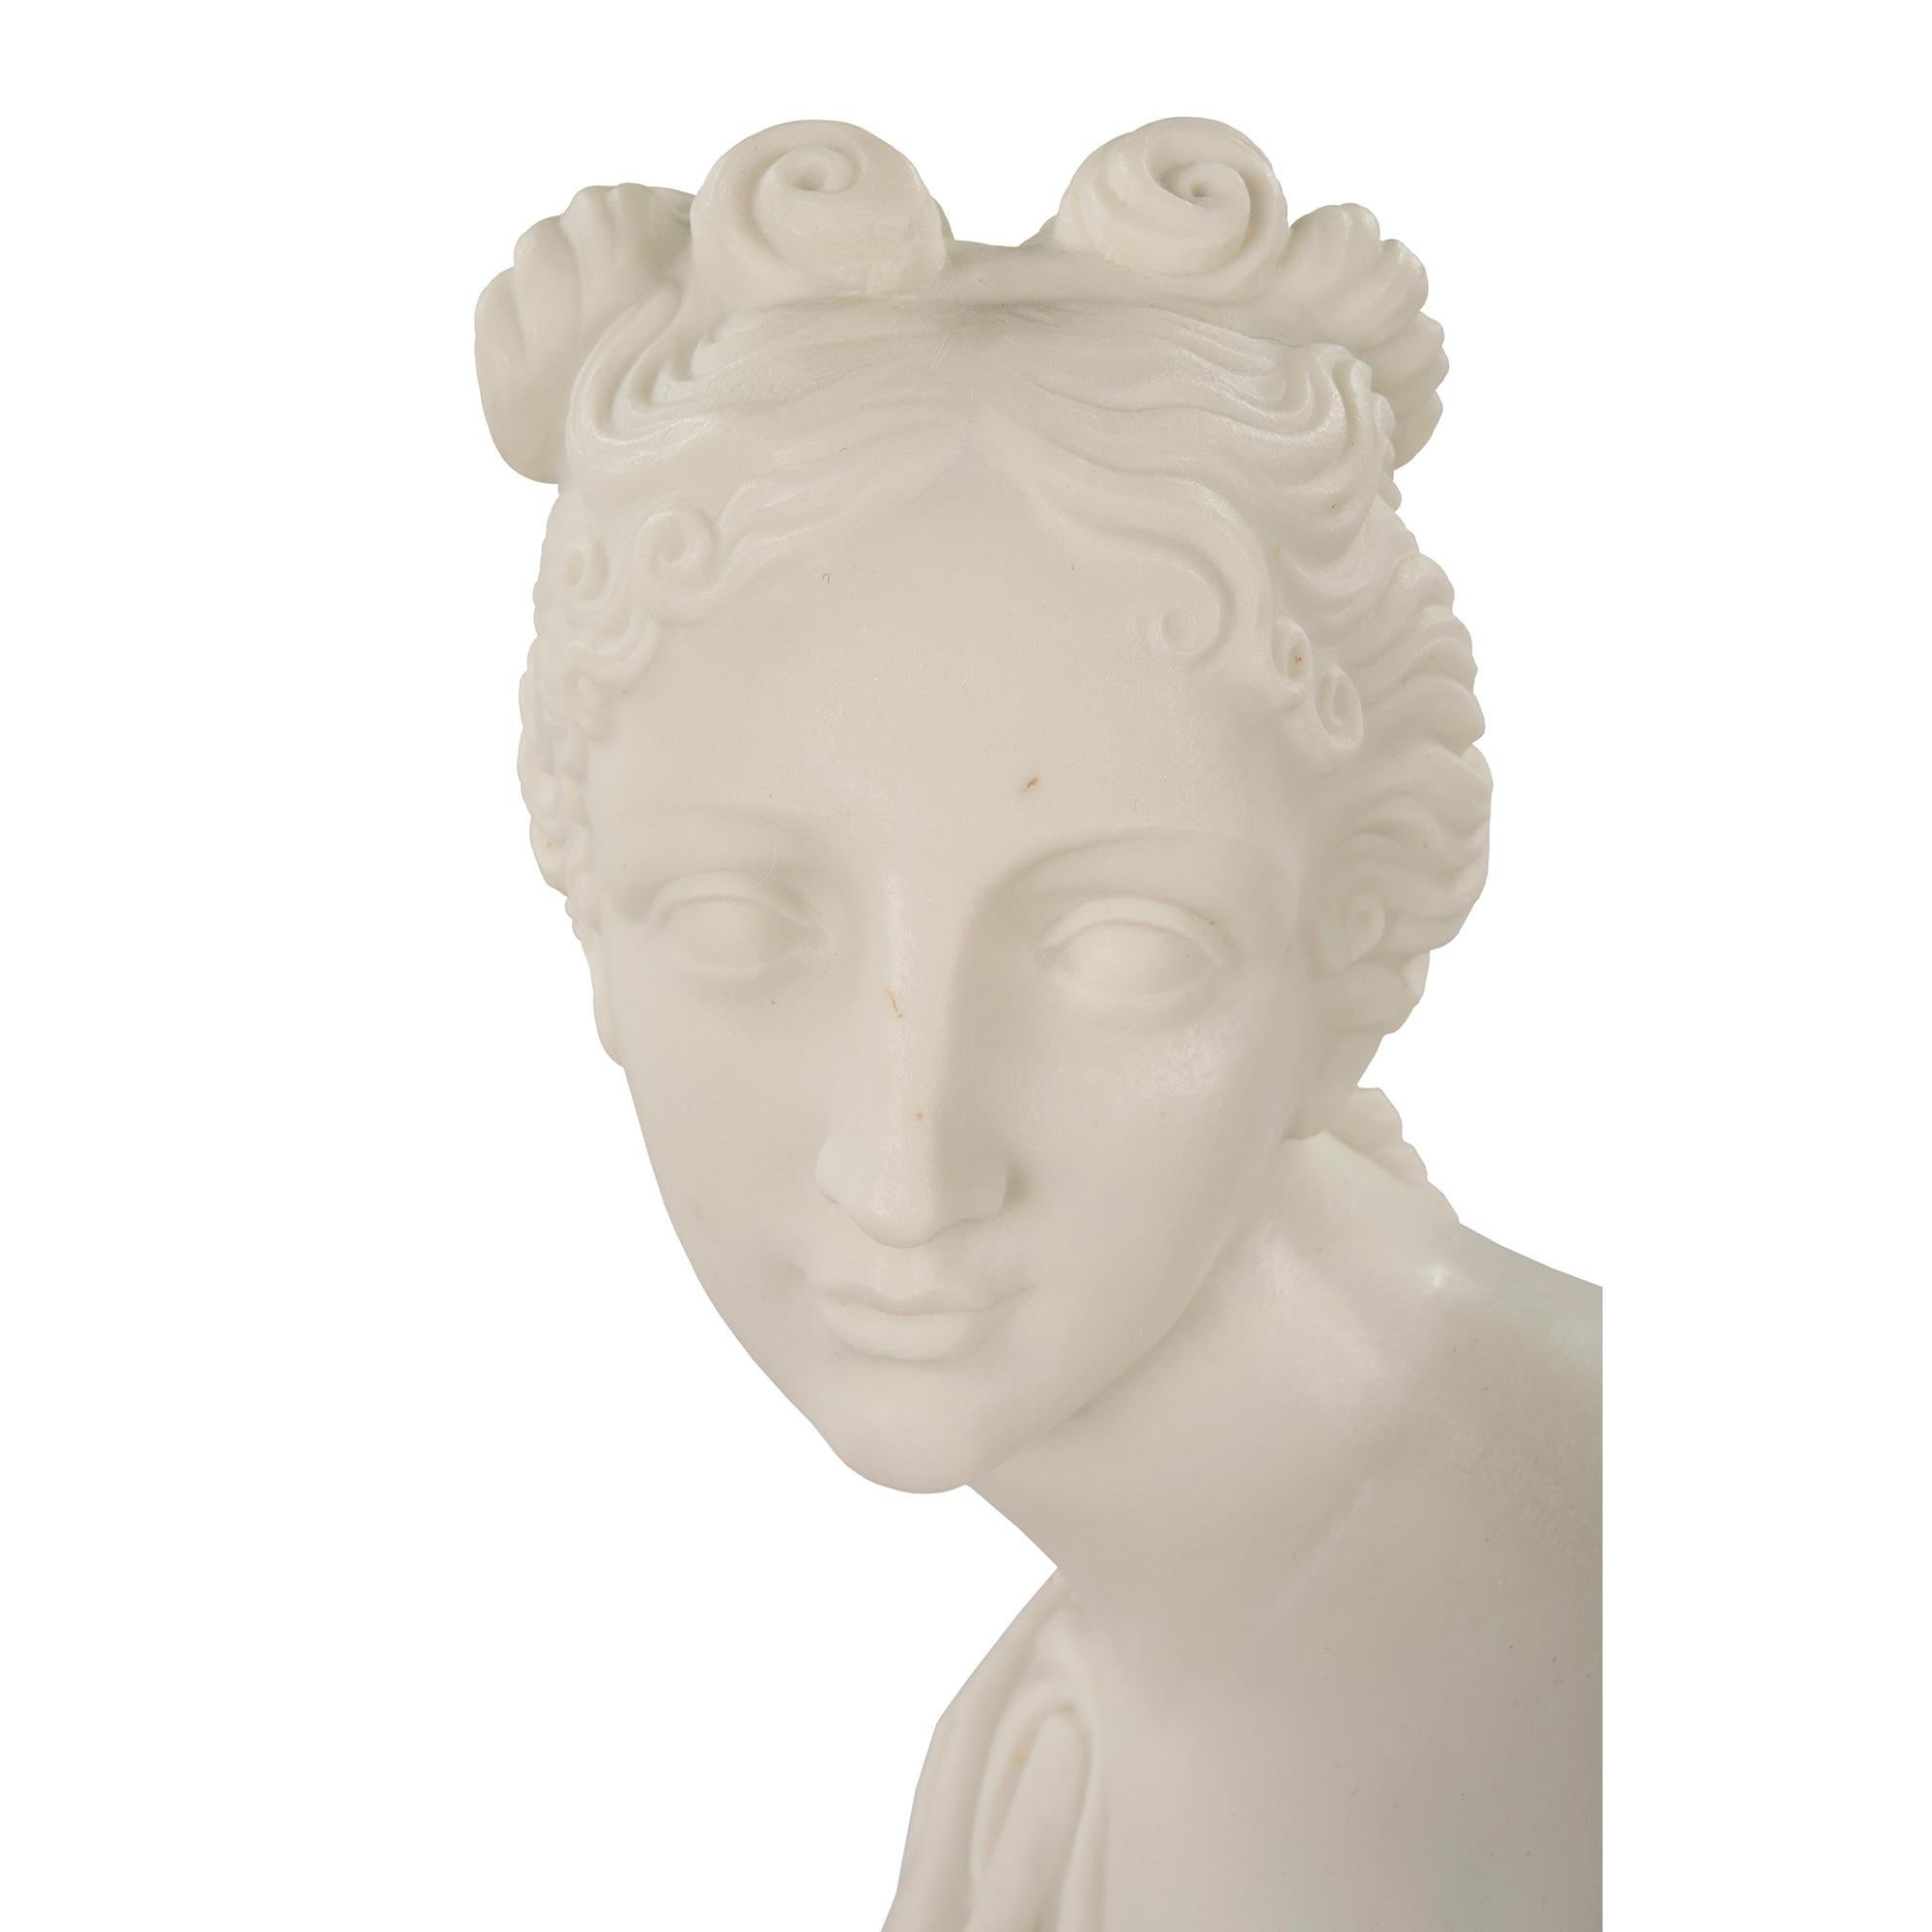 Italian 19th Century Neoclassical Style Biscuit de Sèvres Statue of Venus For Sale 1